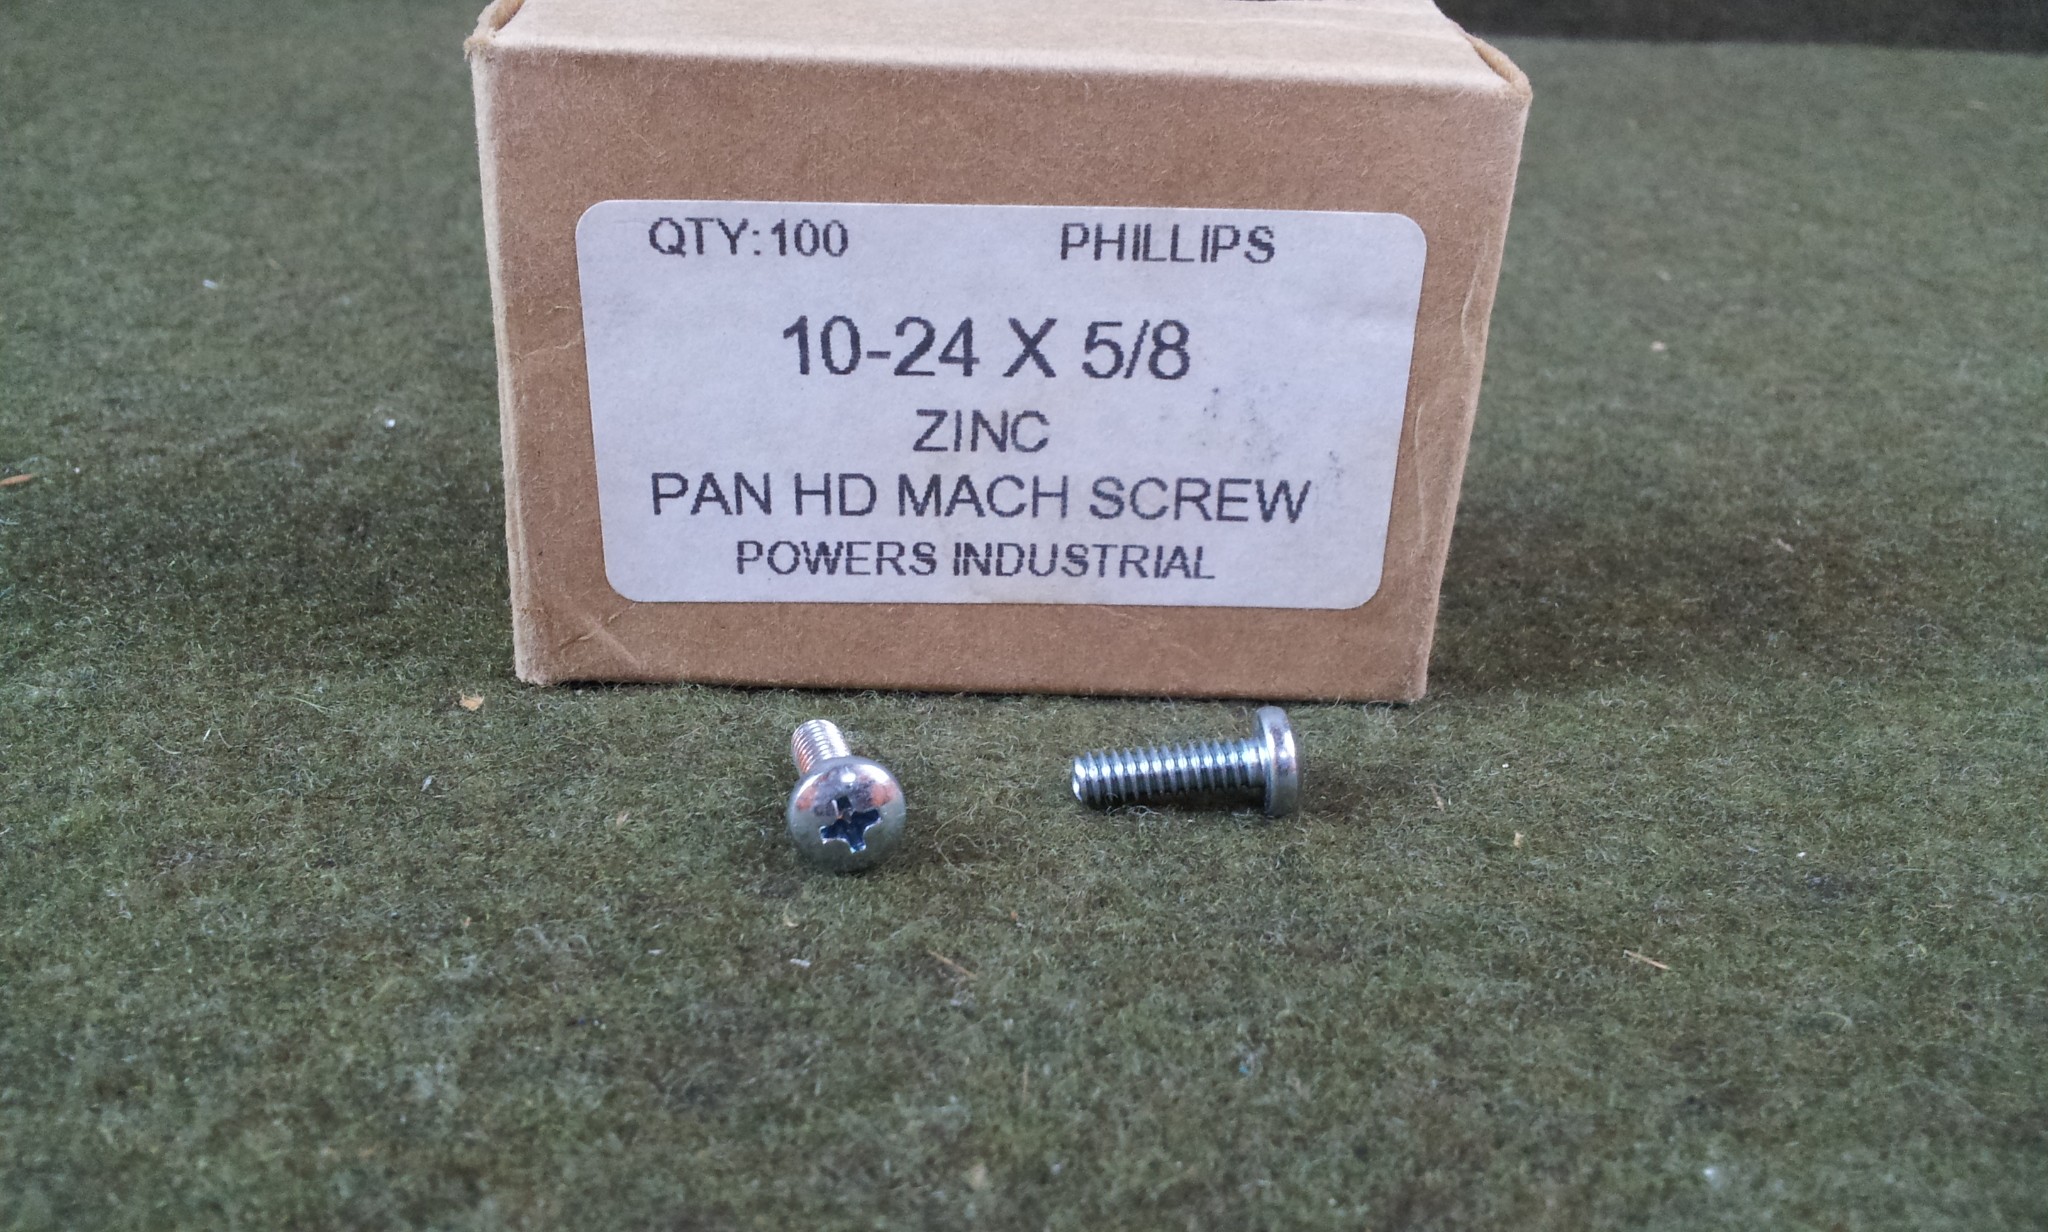 Powers Industrial Pan Head 10-24 x 5/8 Phillips Machine Screw Zinc Qty 100